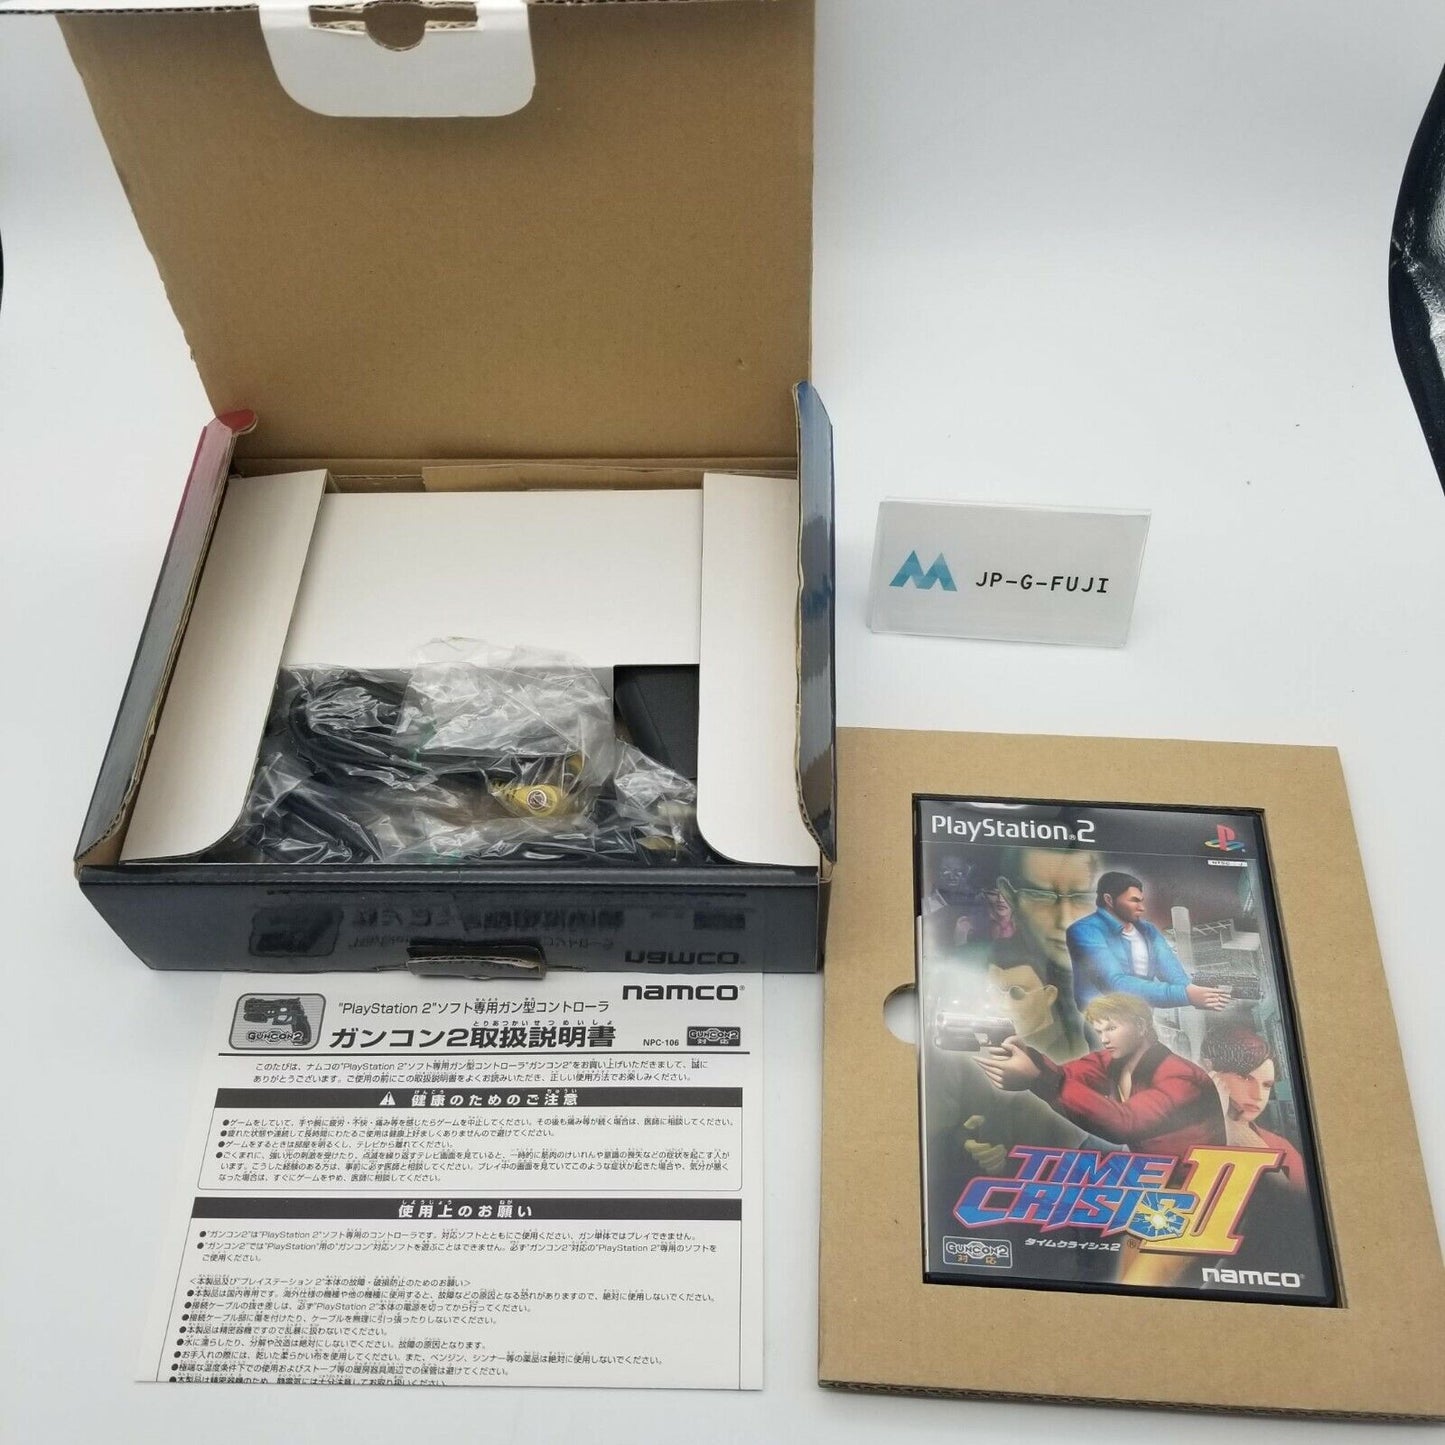 Time Crisis II Guncon 2 [ 2 Controller ] Nanco Playstation 2  w/ Box Japanese